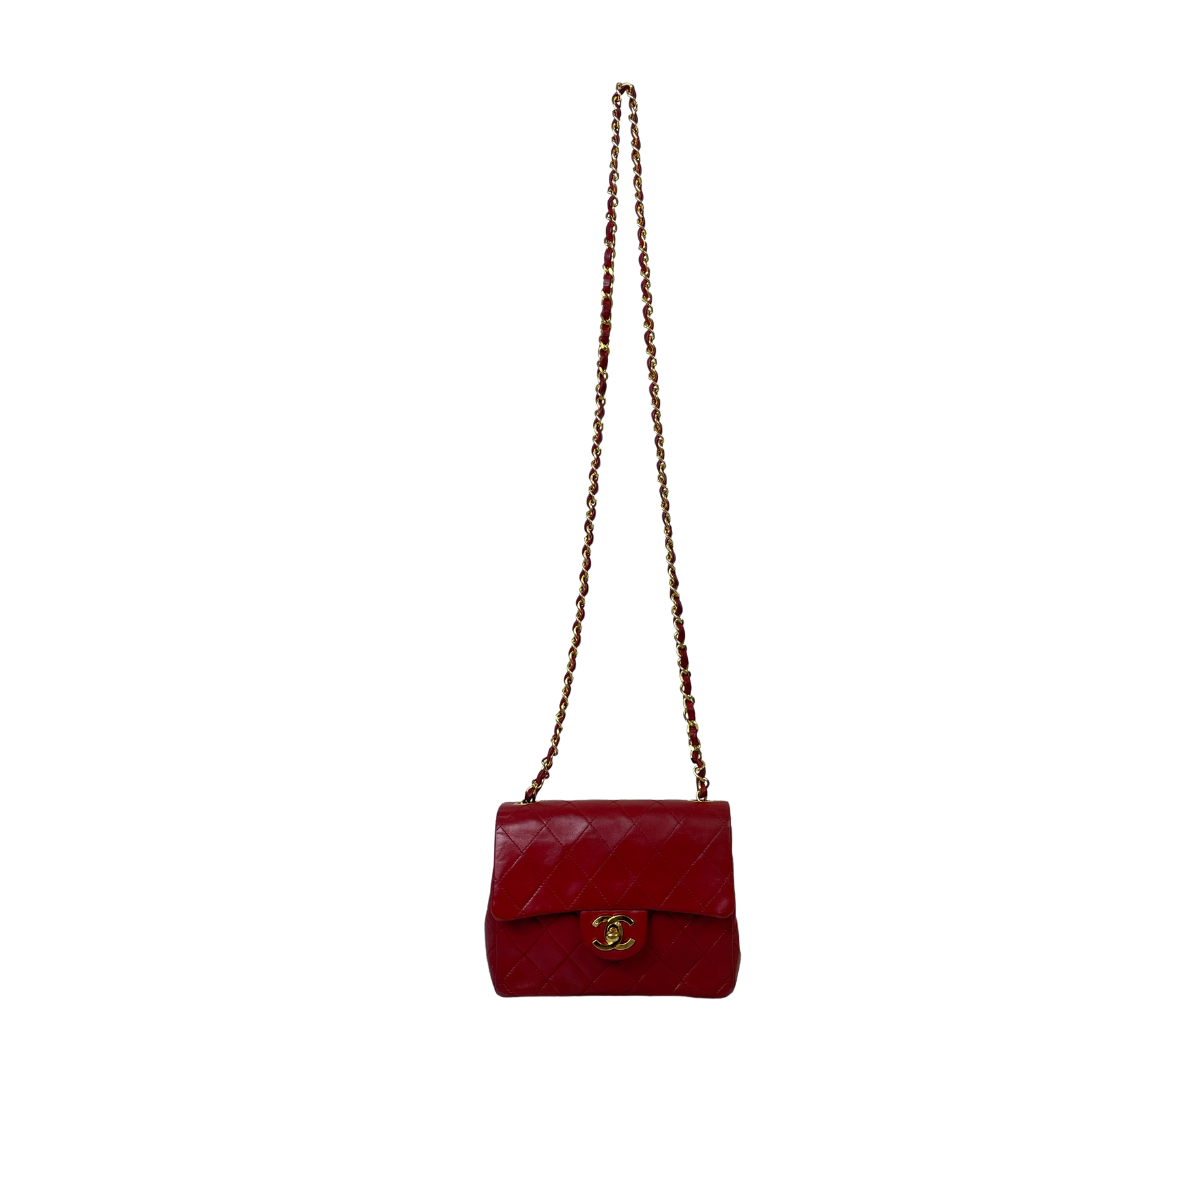 crossbody chanel handbags new